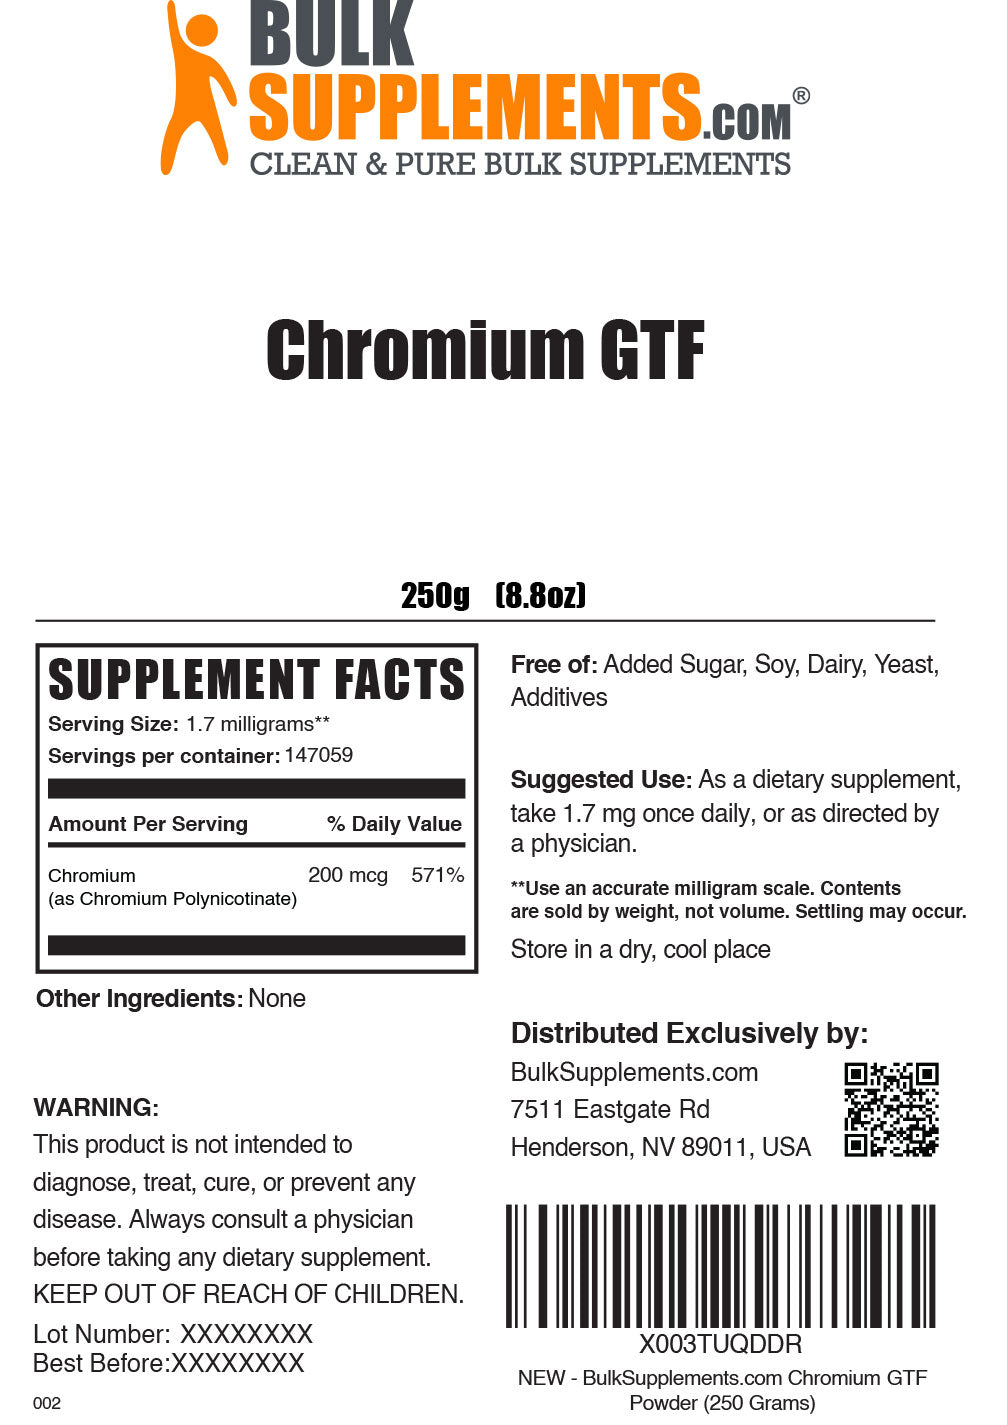 Chromium GTF powder label 250g